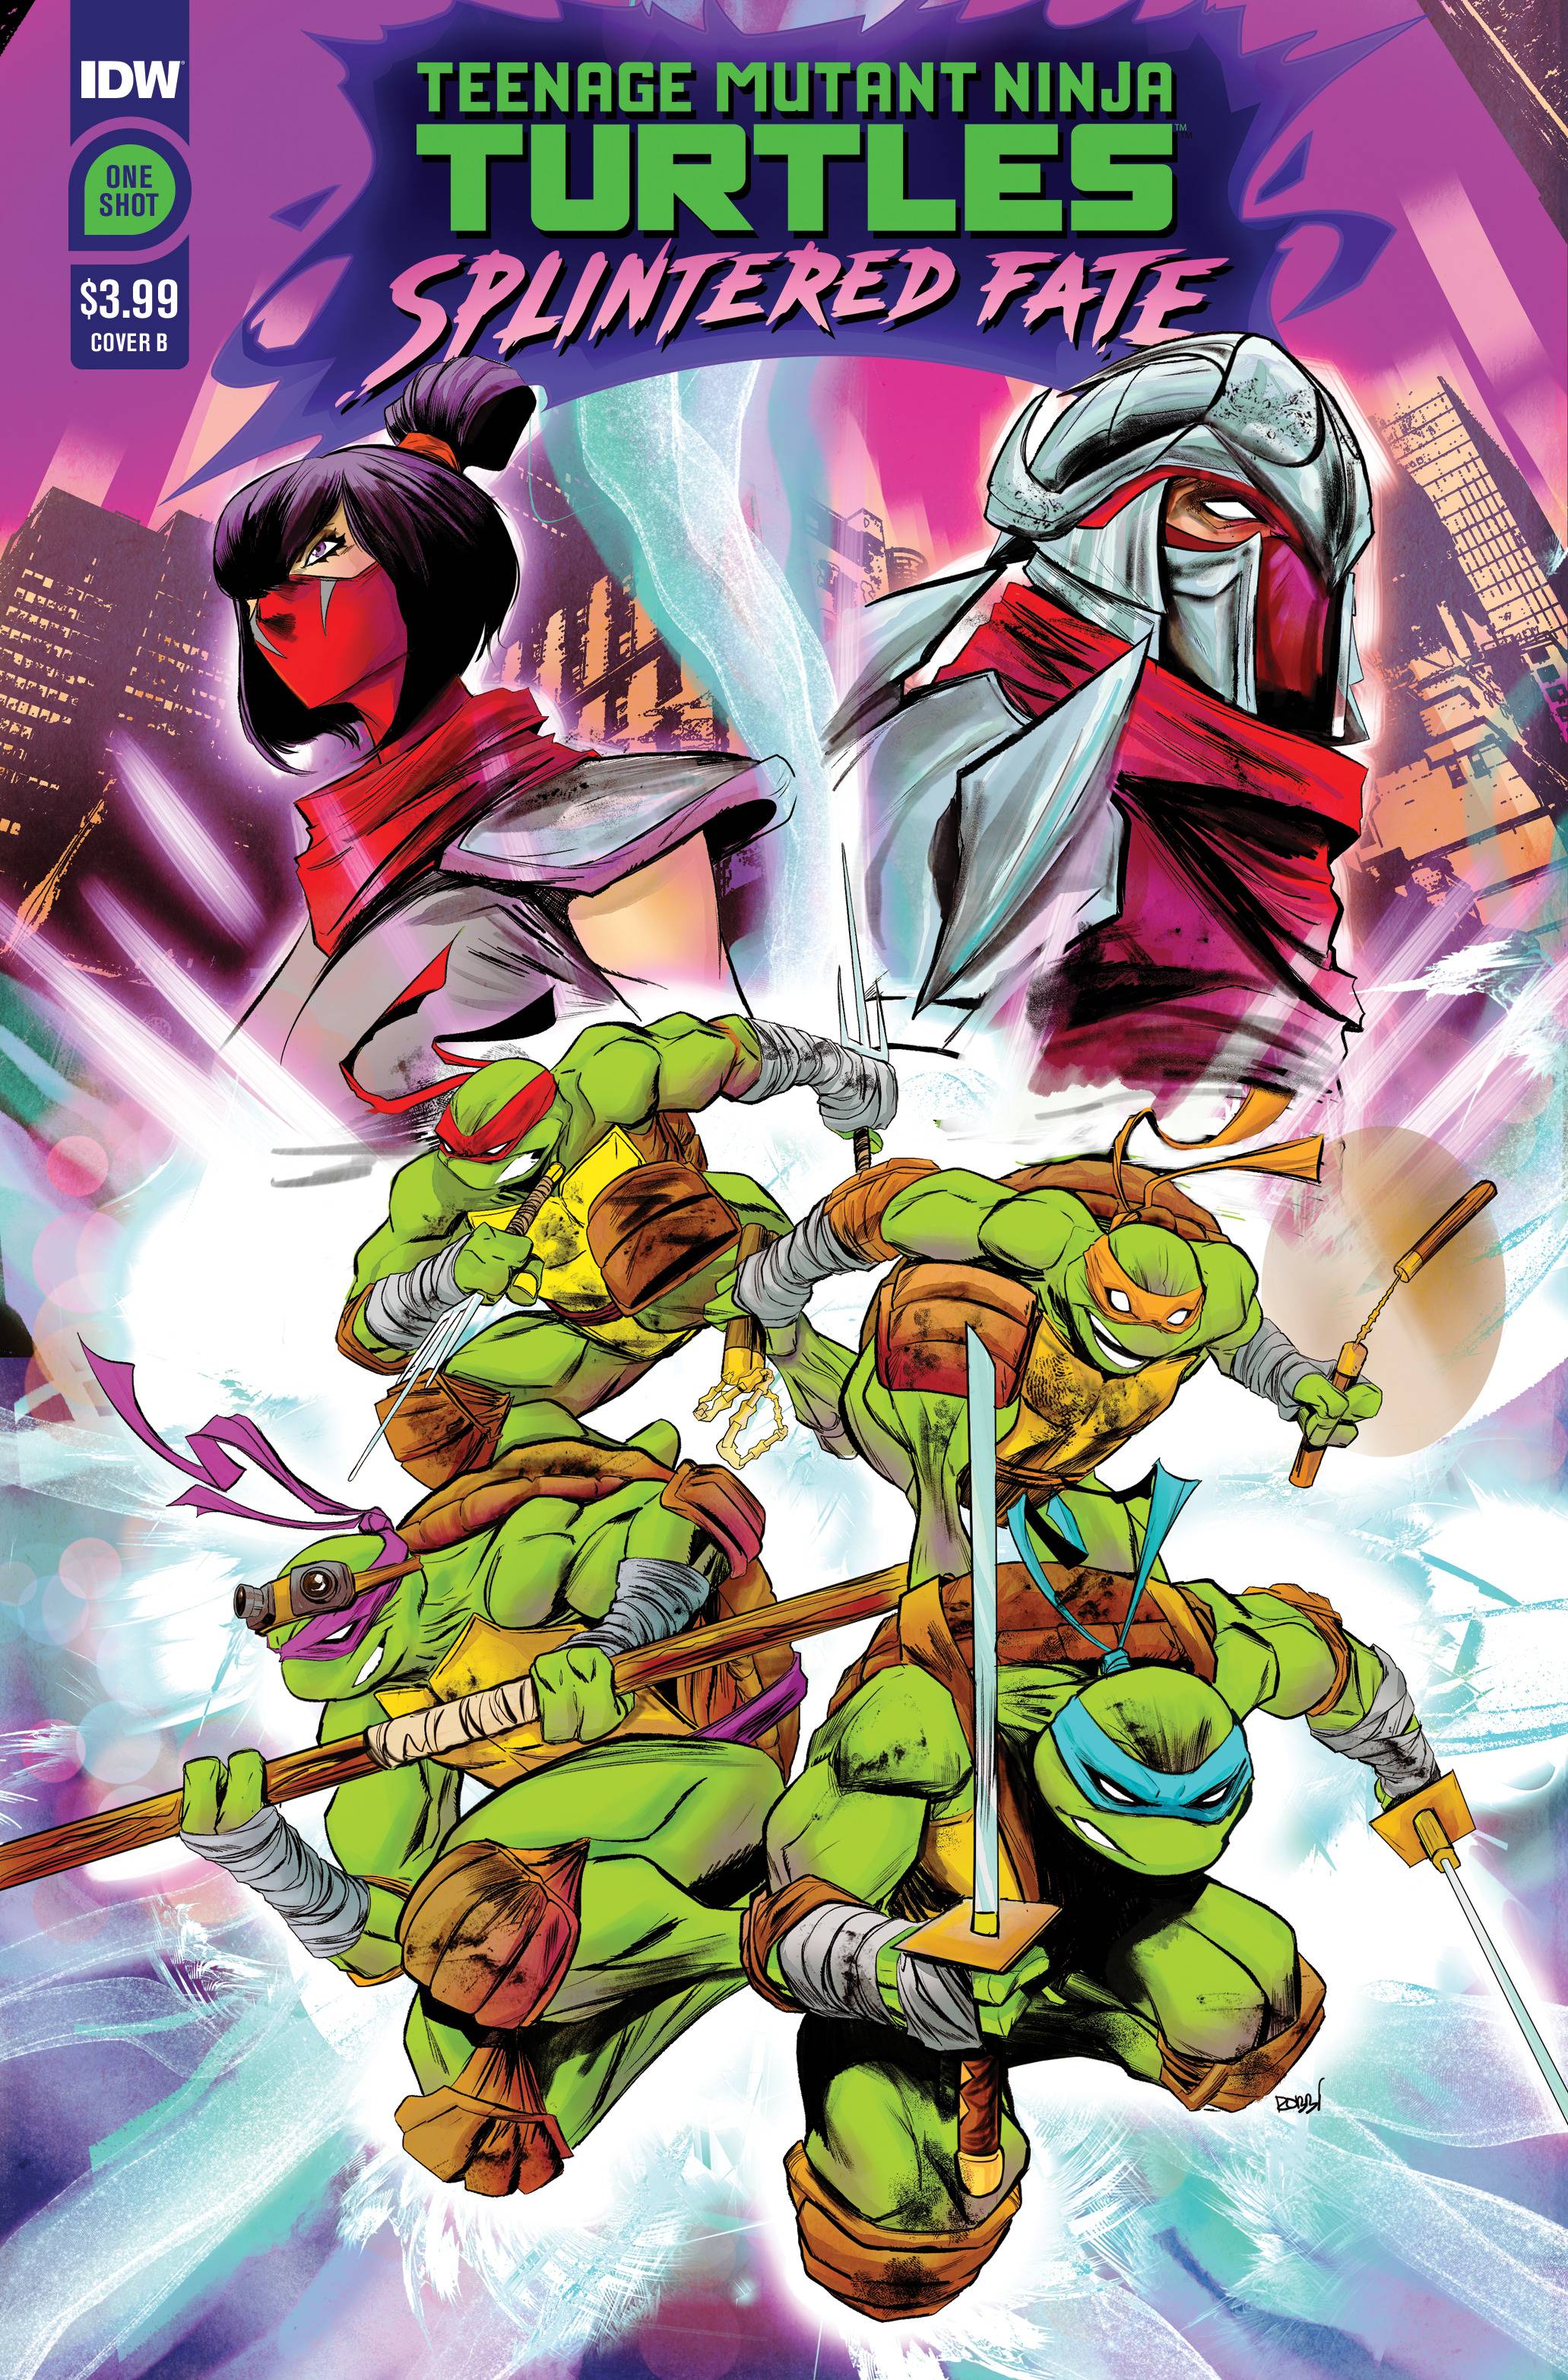 Teenage mutant ninja turtles splintered fate. TMNT IDW. Сплинтер комикс. Комиксы TMNT IDW.